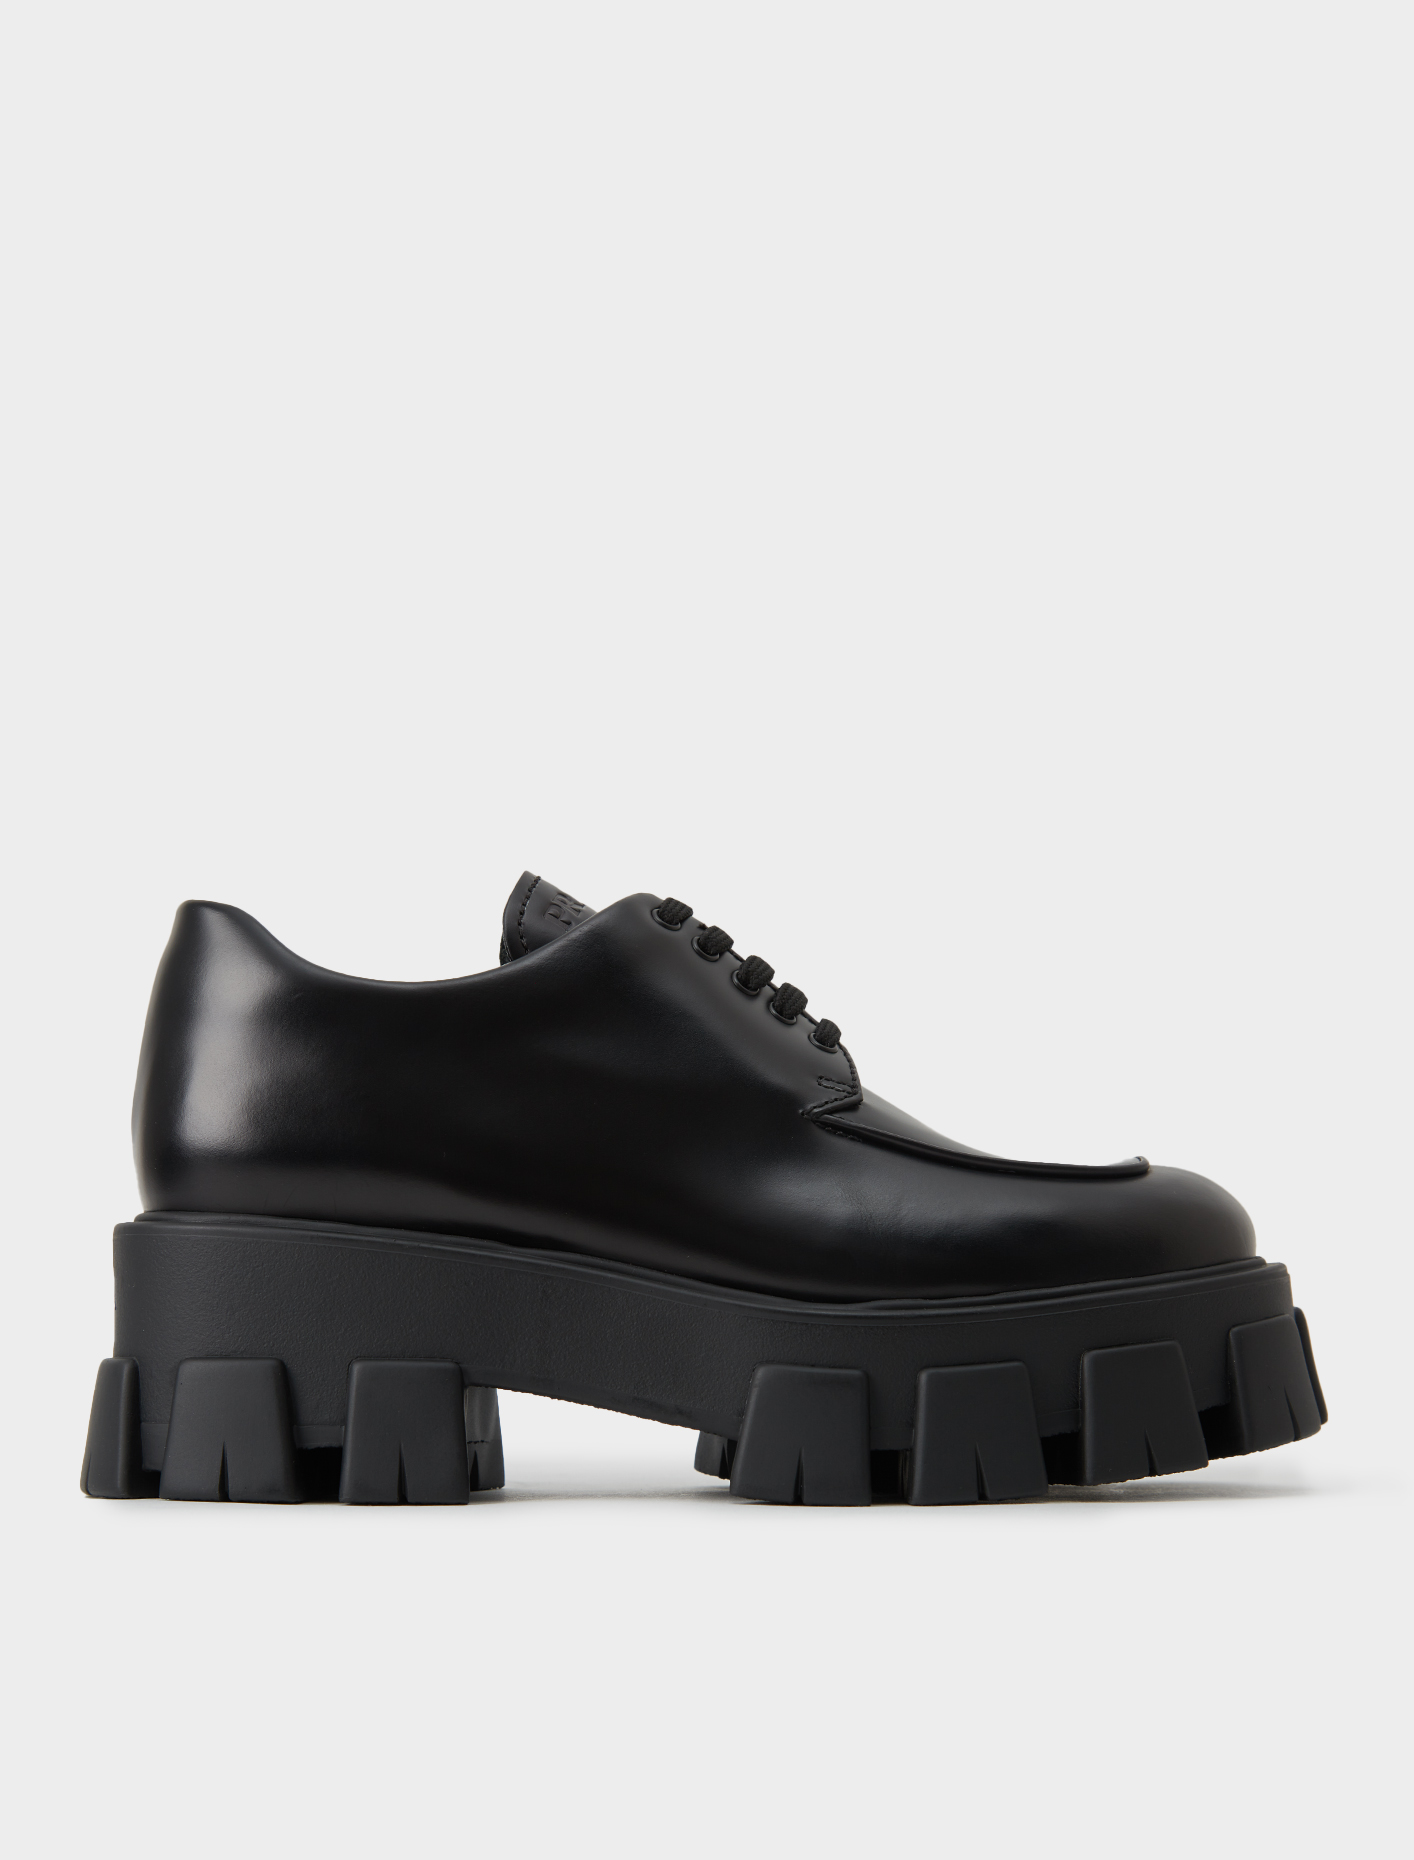 Prada Laced Shoe in Black | Voo Store 